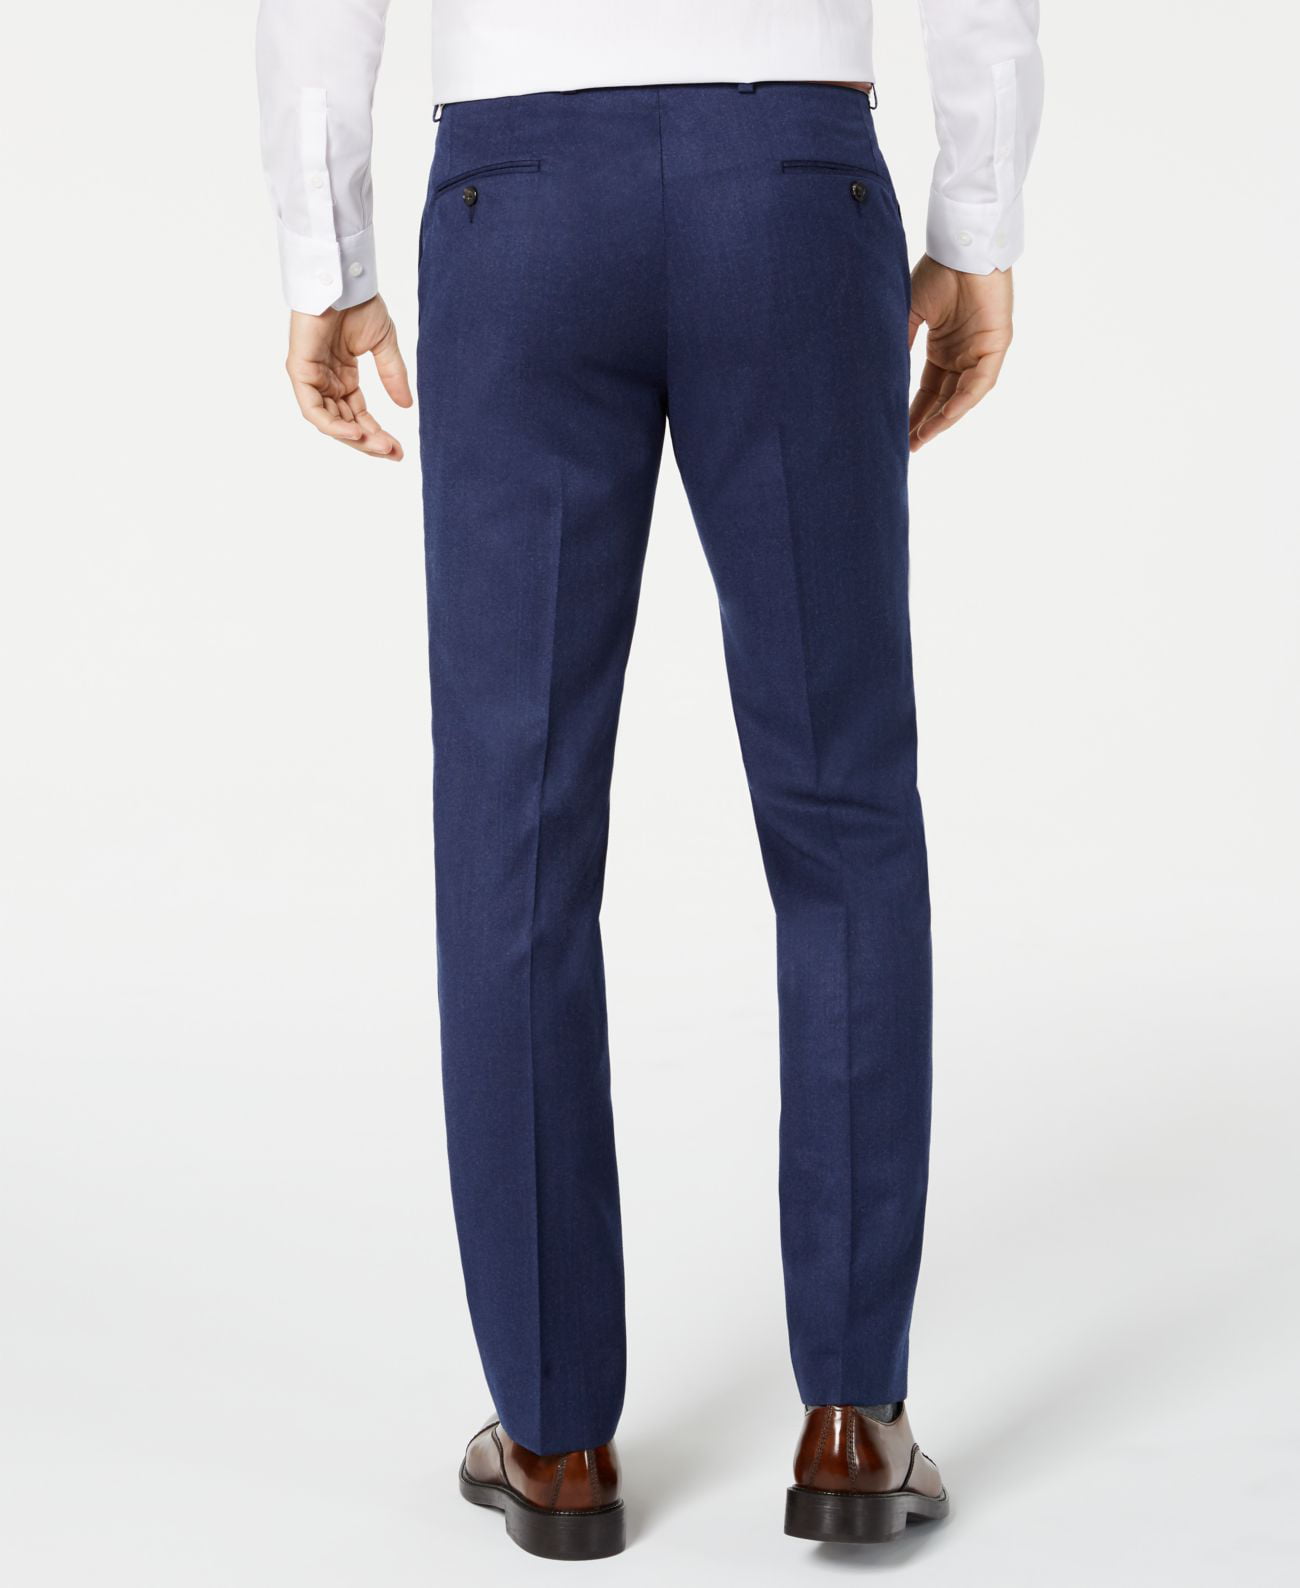 Ralph Lauren Men’s Classic-Fit Solid Dress Pants, Navy